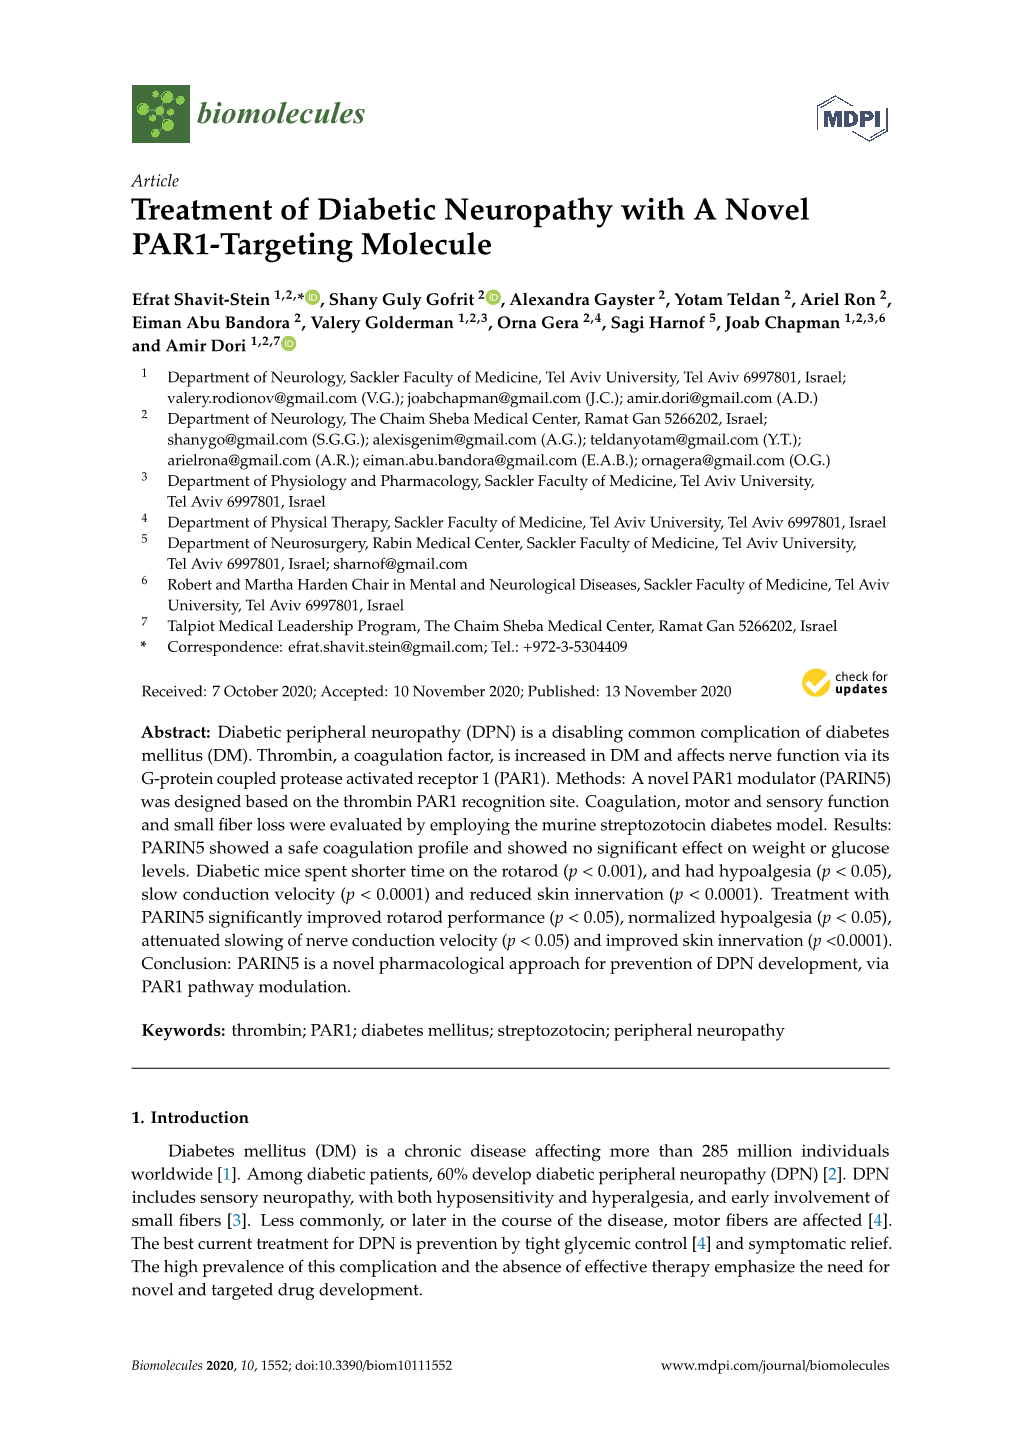 Treatment of Diabetic Neuropathy with a Novel PAR1-Targeting Molecule